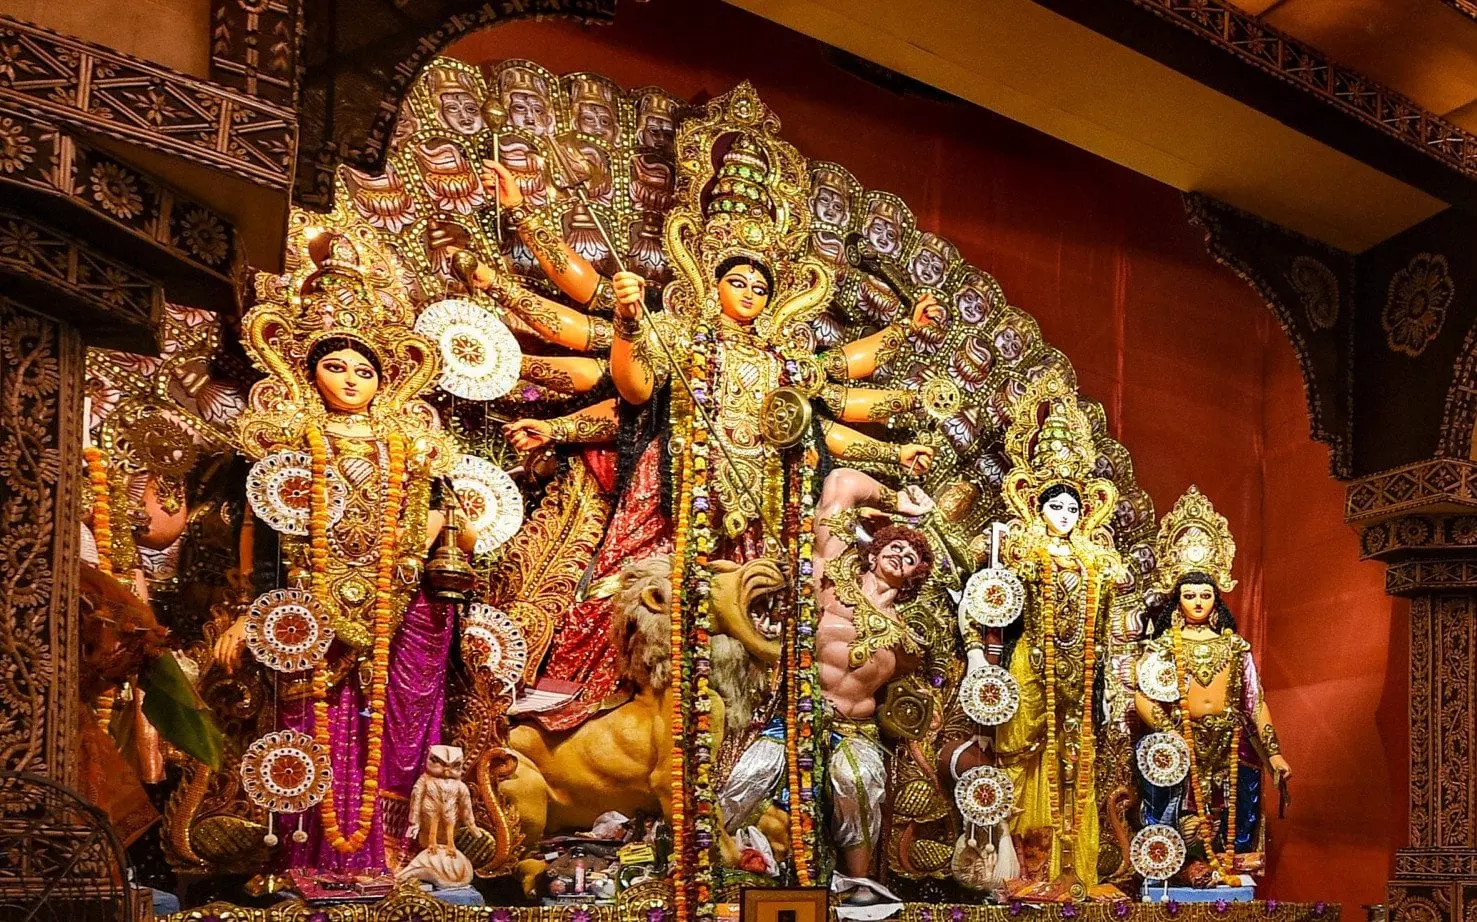 Kolkata Durga Puja 2023 themes 10 mustvisit pandals this year